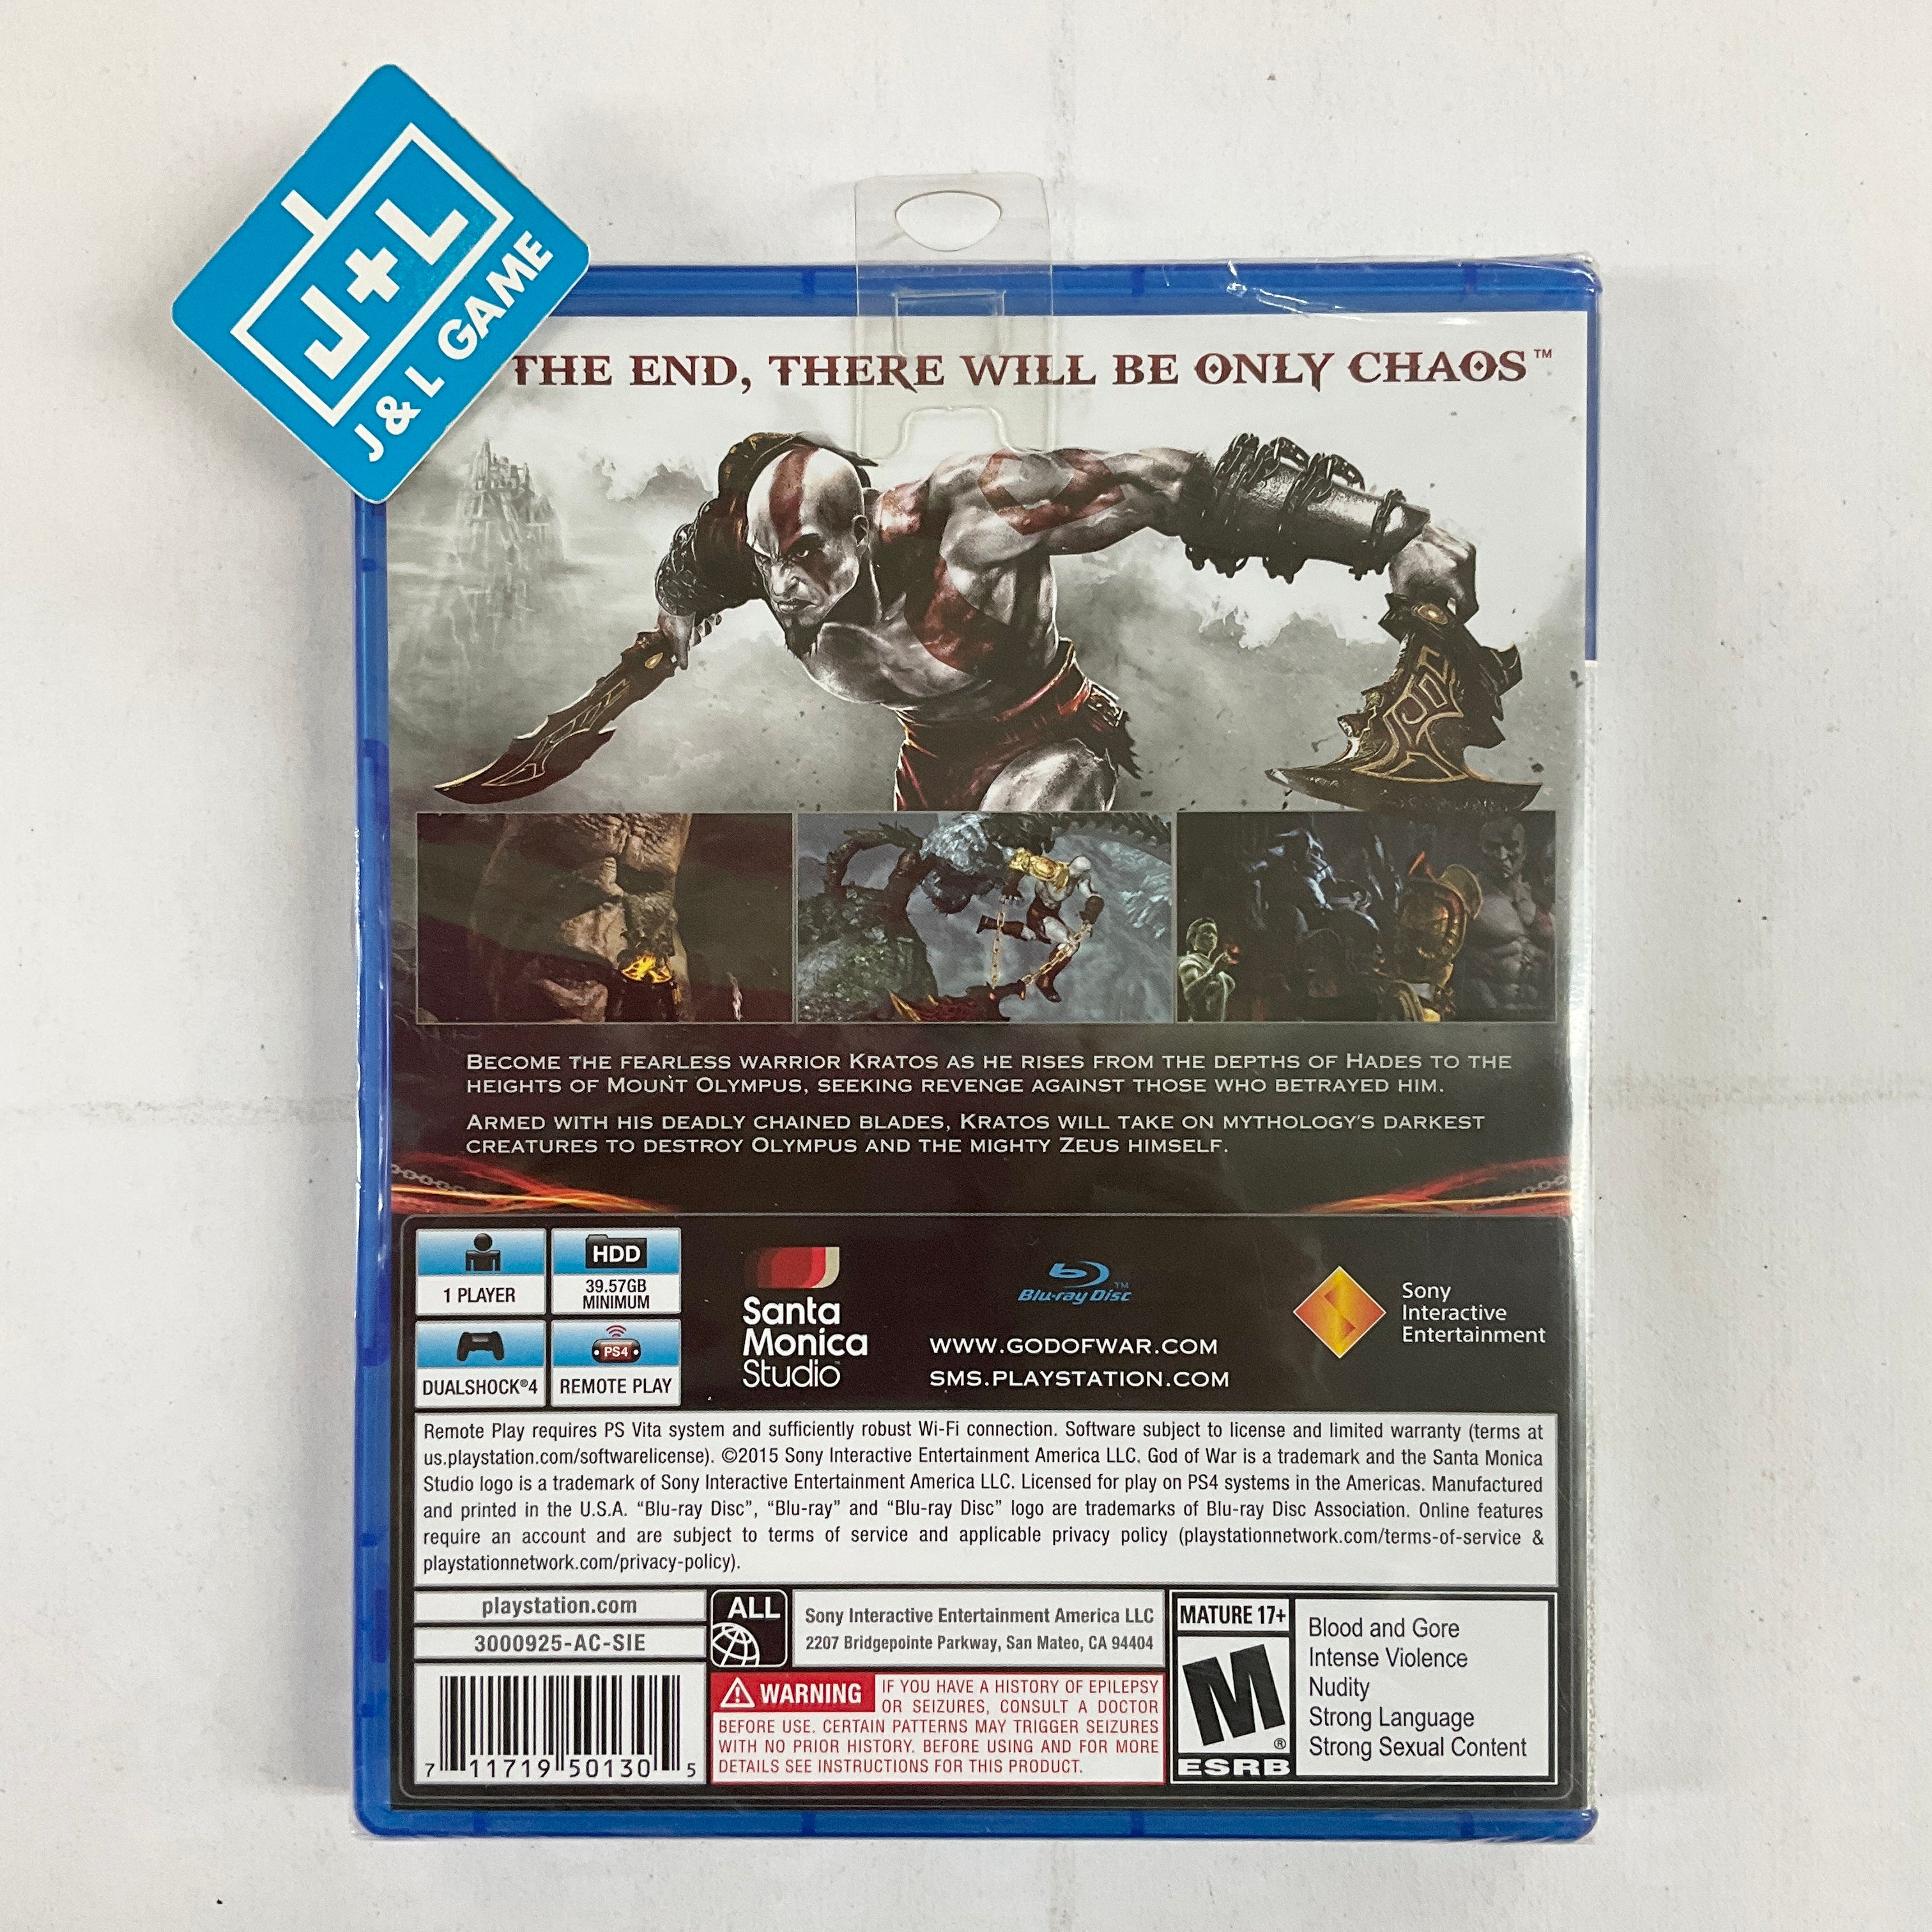 God of War III Remastered - (PS4) PlayStation 4 Video Games SCEA   